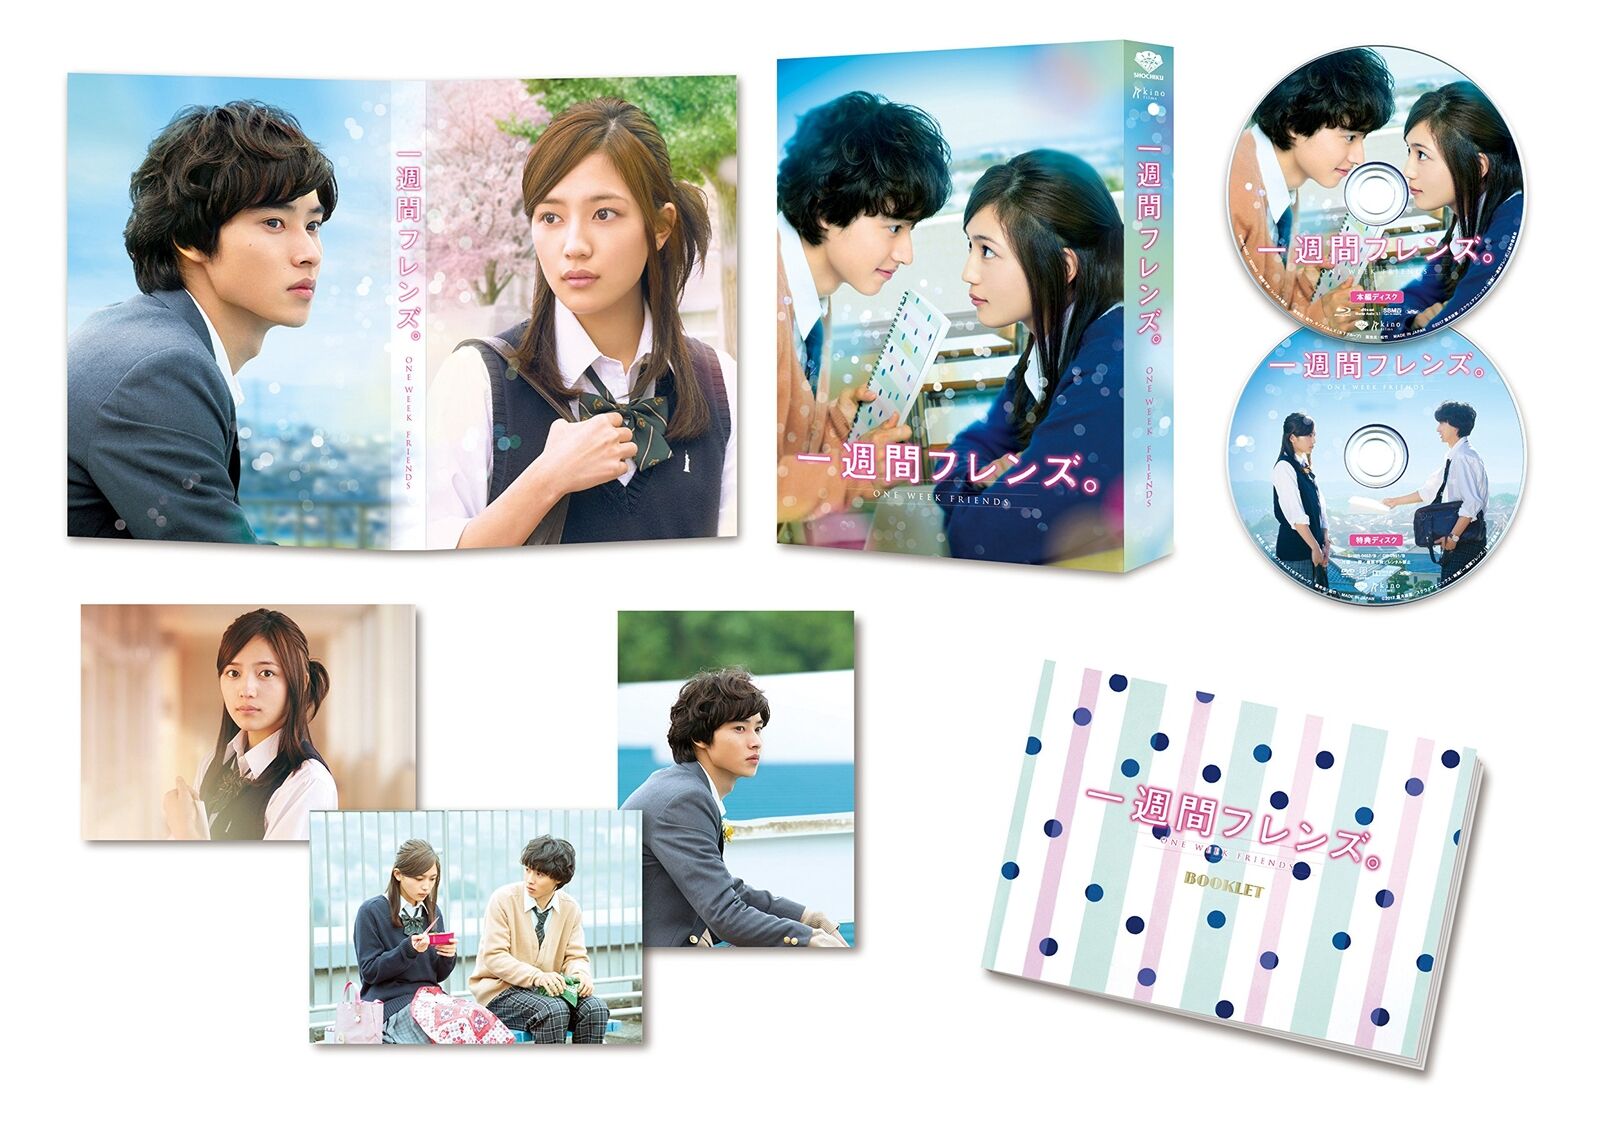 Shochiku Friends For A Week Deluxe Haruna Kawaguchi Prime Video Blu-ray Dvd